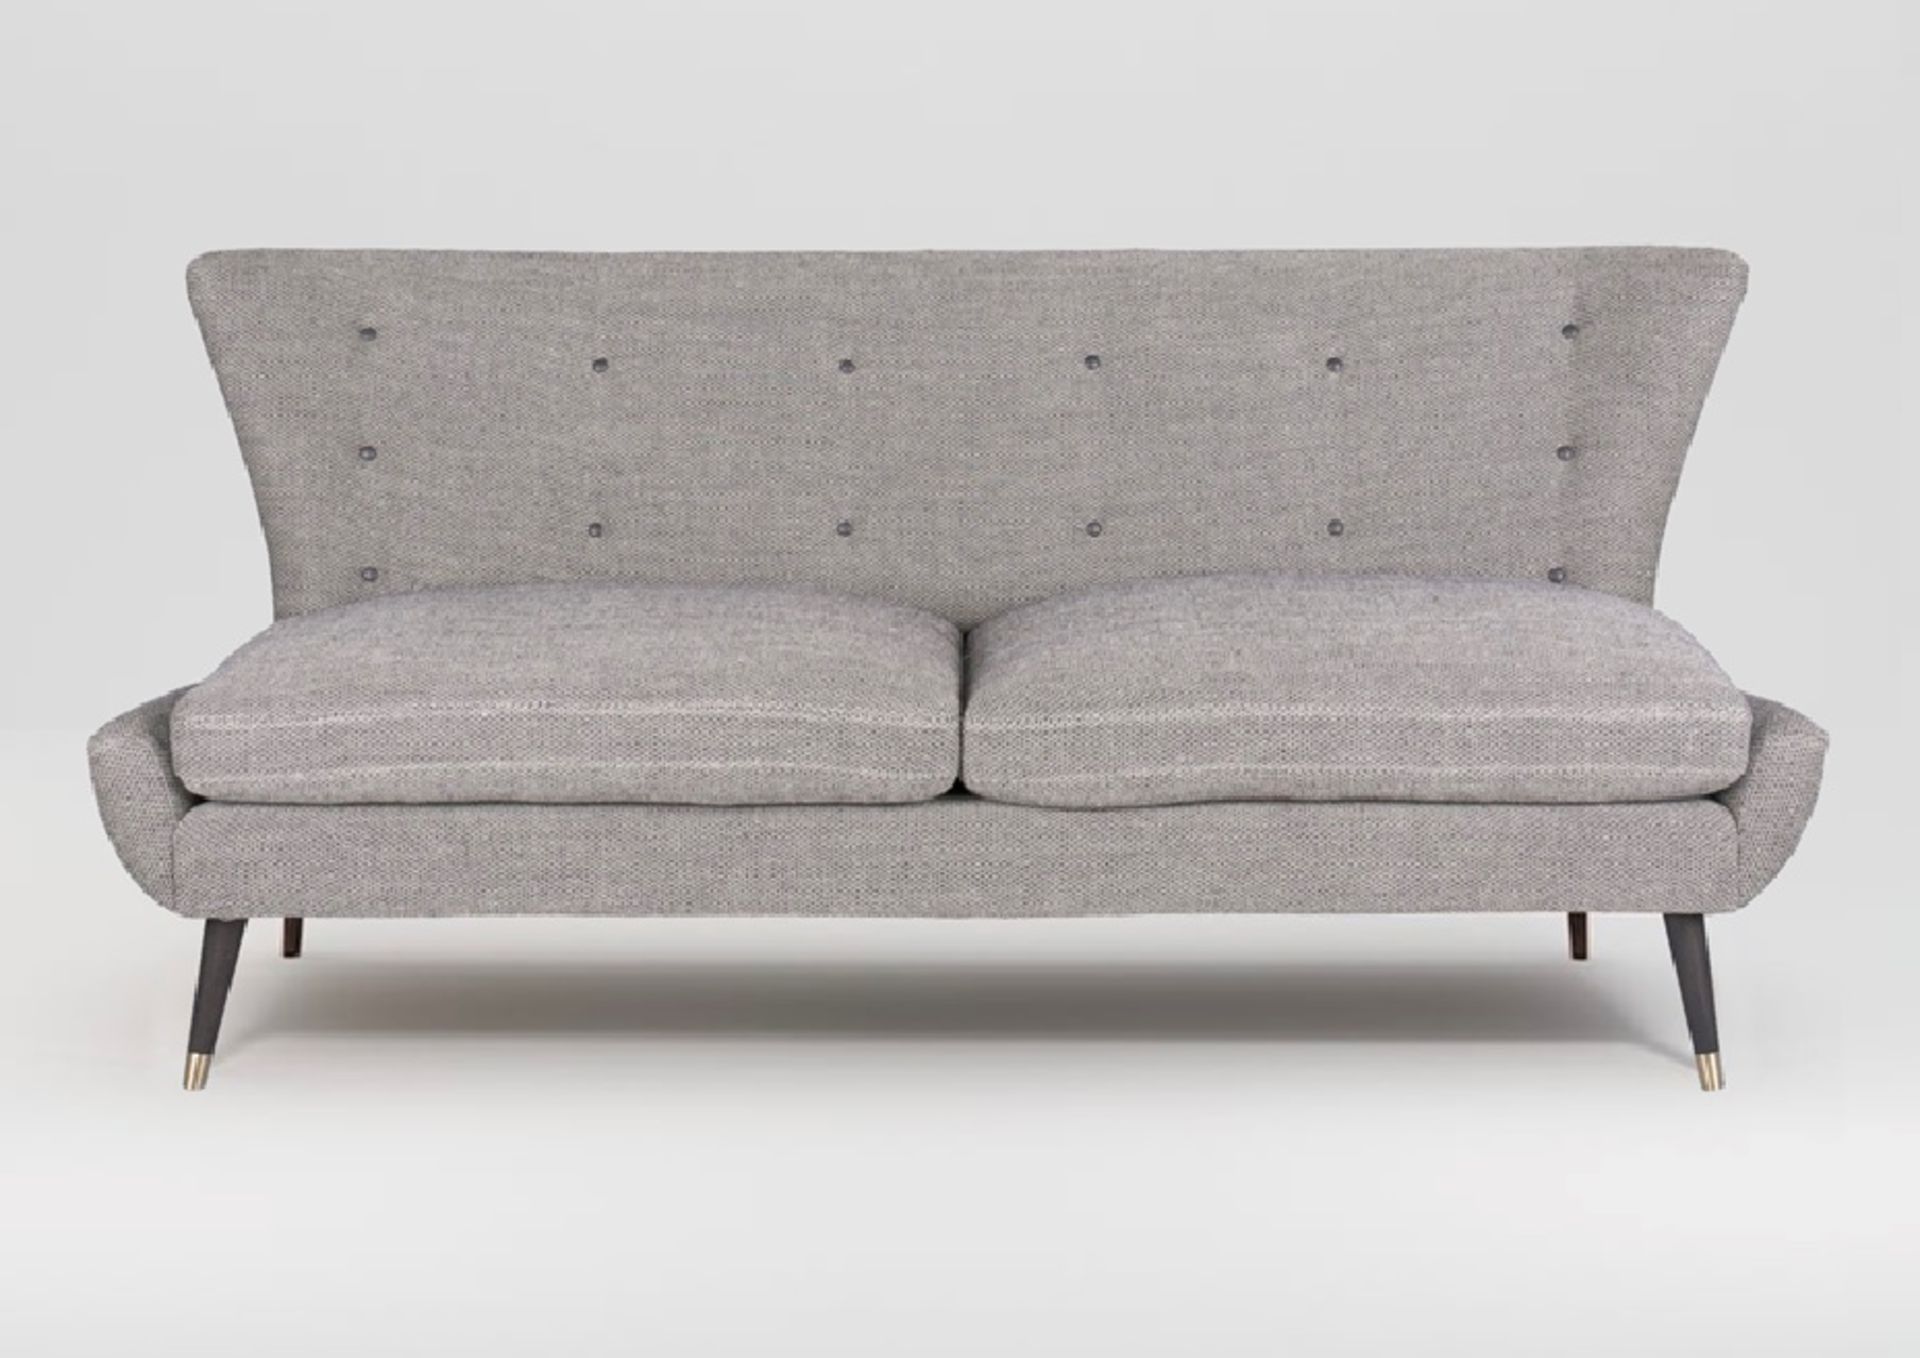 The Dan sofa is an elegant, fashionable and designer sofa featuring a stylish Scandinavian